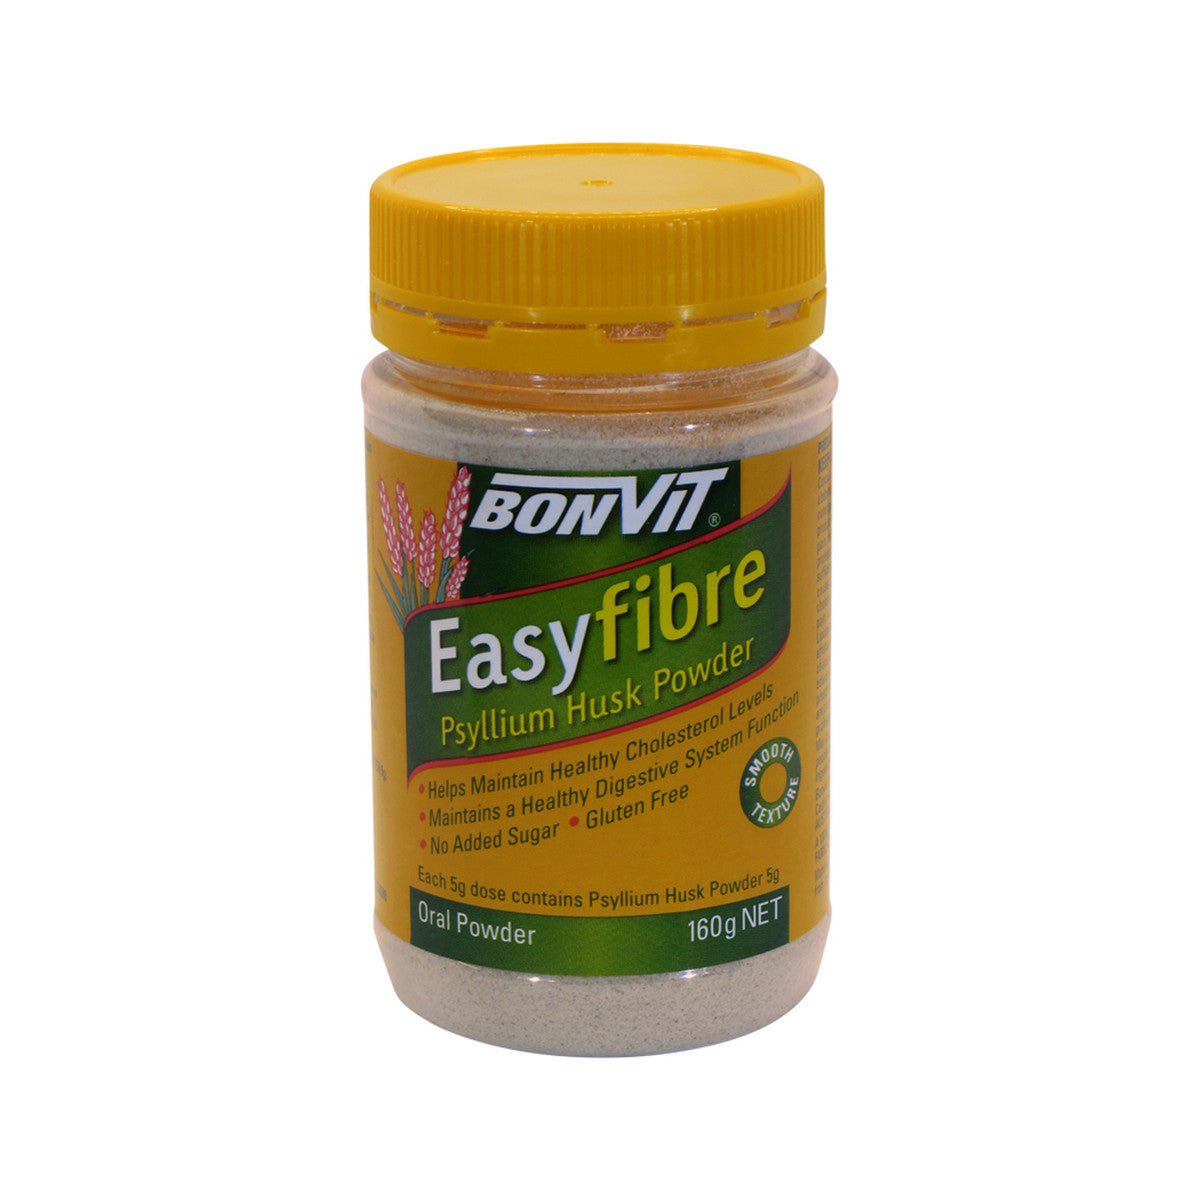 Bonvit Easy Fibre Psyllium Husk Powder 200g, Natural & Effective Fibre